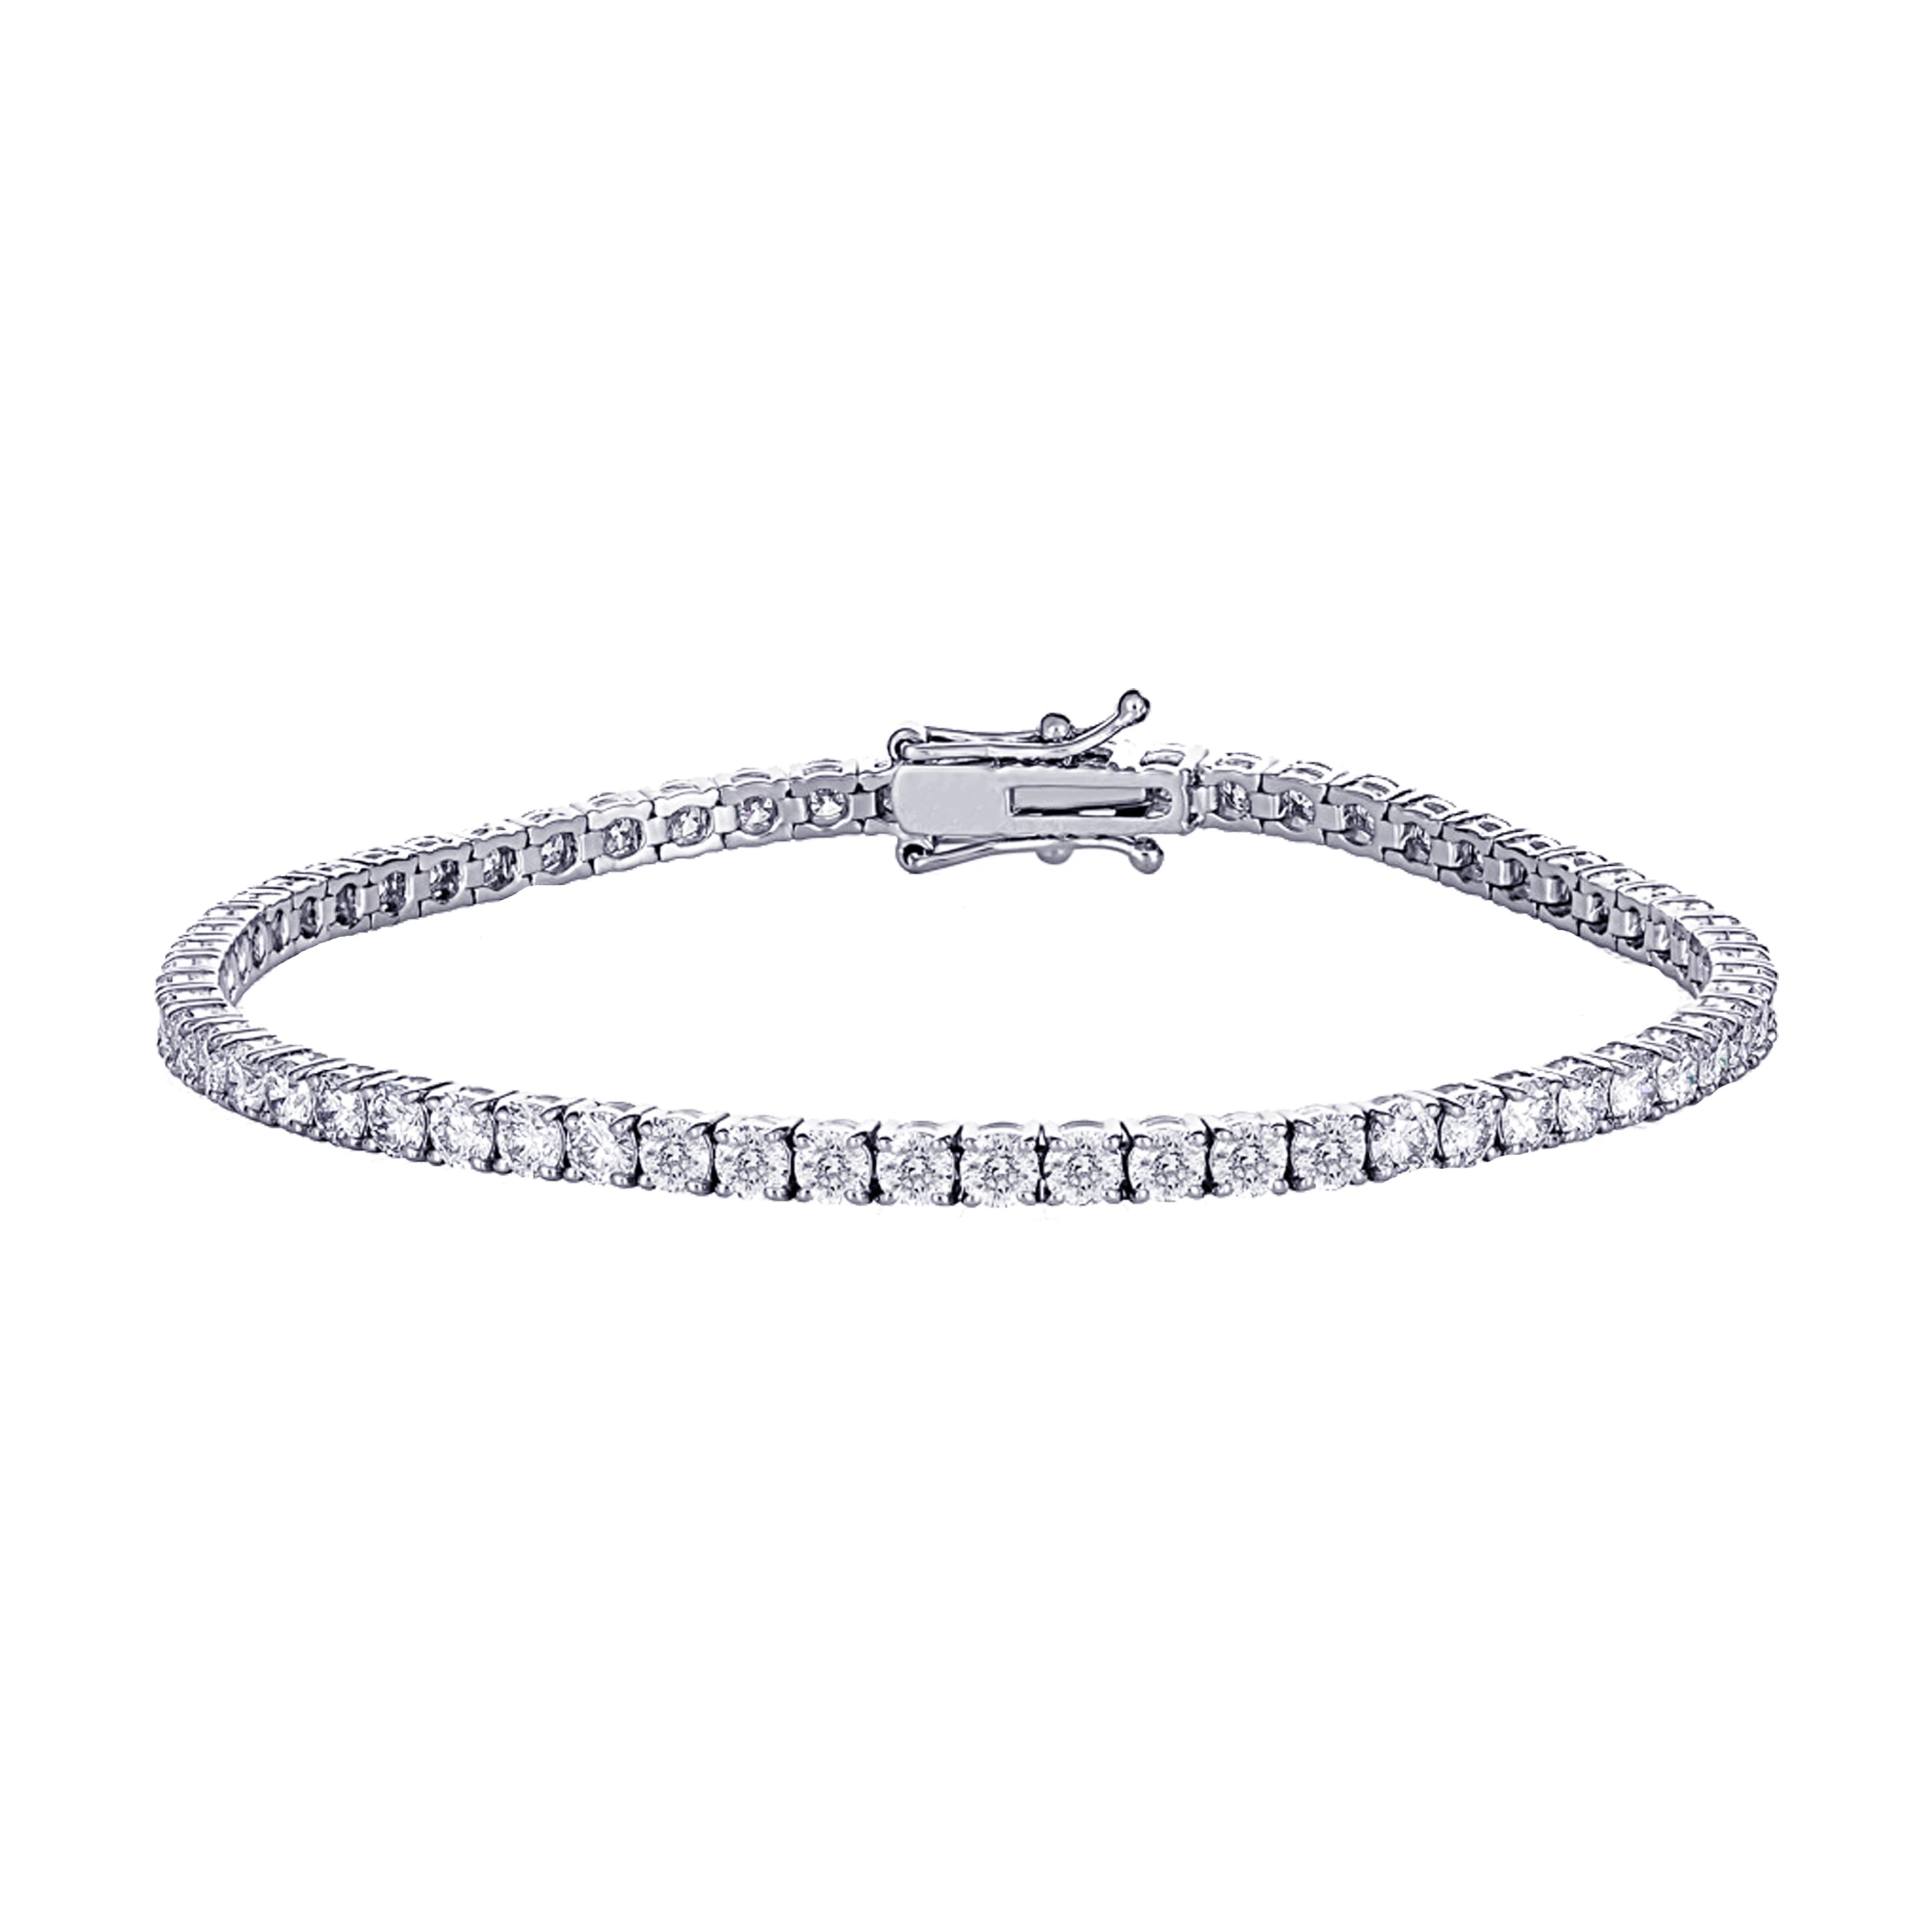 5.23 Carat Diamond Tennis Bracelet